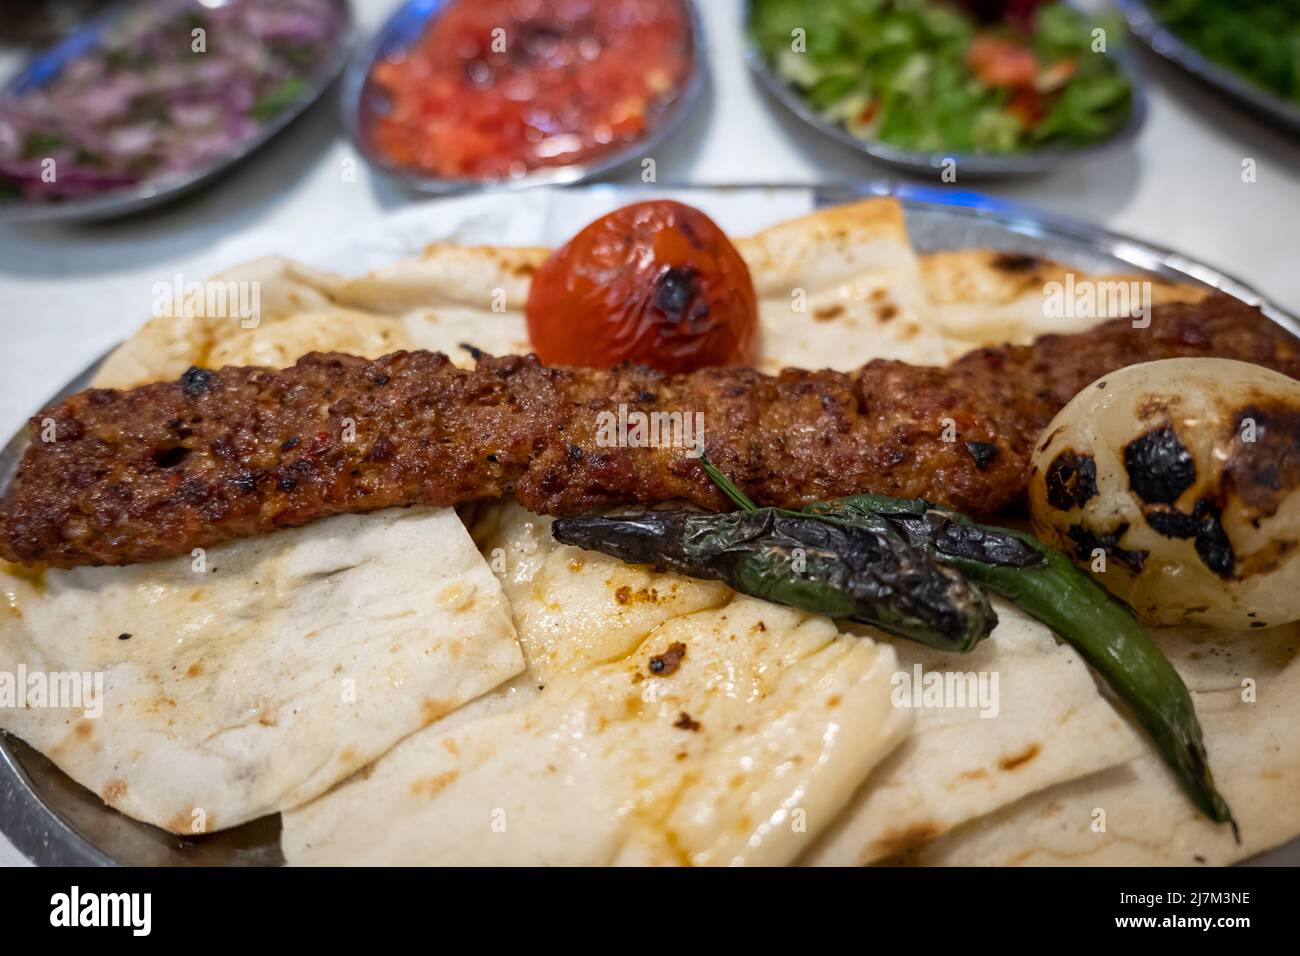 Adana Kebab, traditional Turkish cuisine with kebab meat, vegetables on the plate in Adana, Turkey Stock Photo